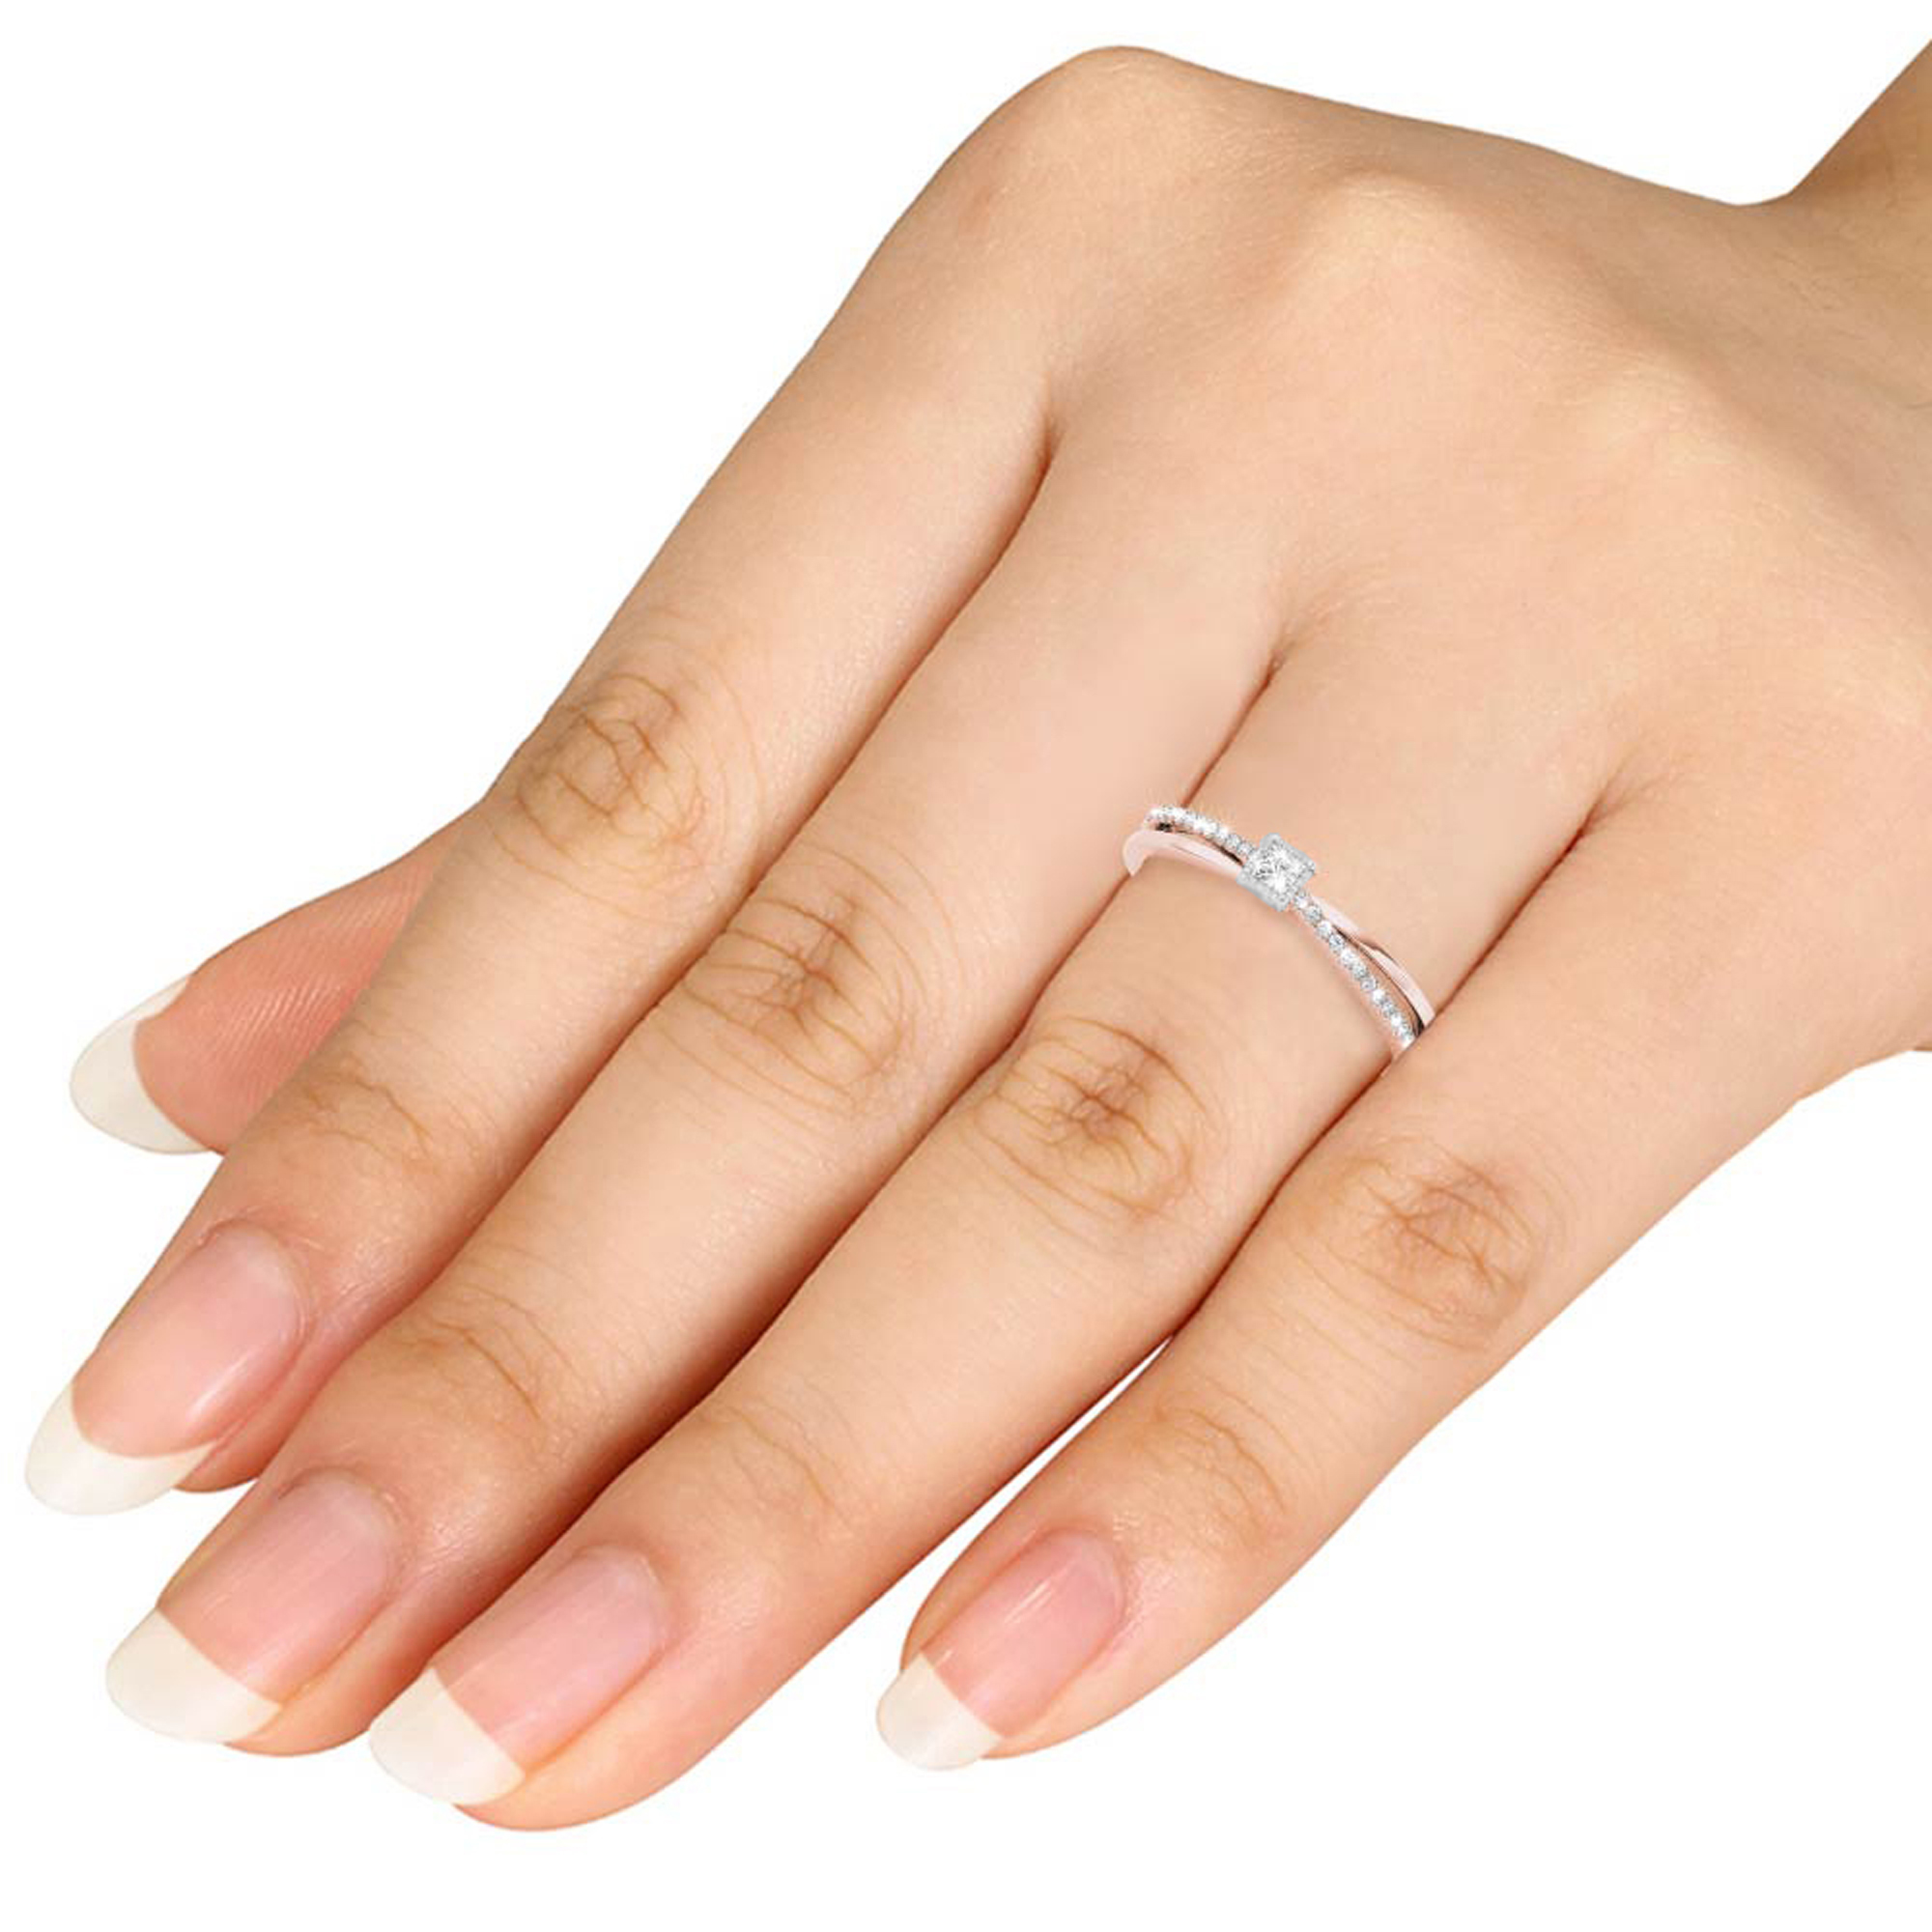 Amouria 10k Rose Gold 1/8 Ct Princess Cut Diamond Three Stone Engagement Ring (HI, I2)